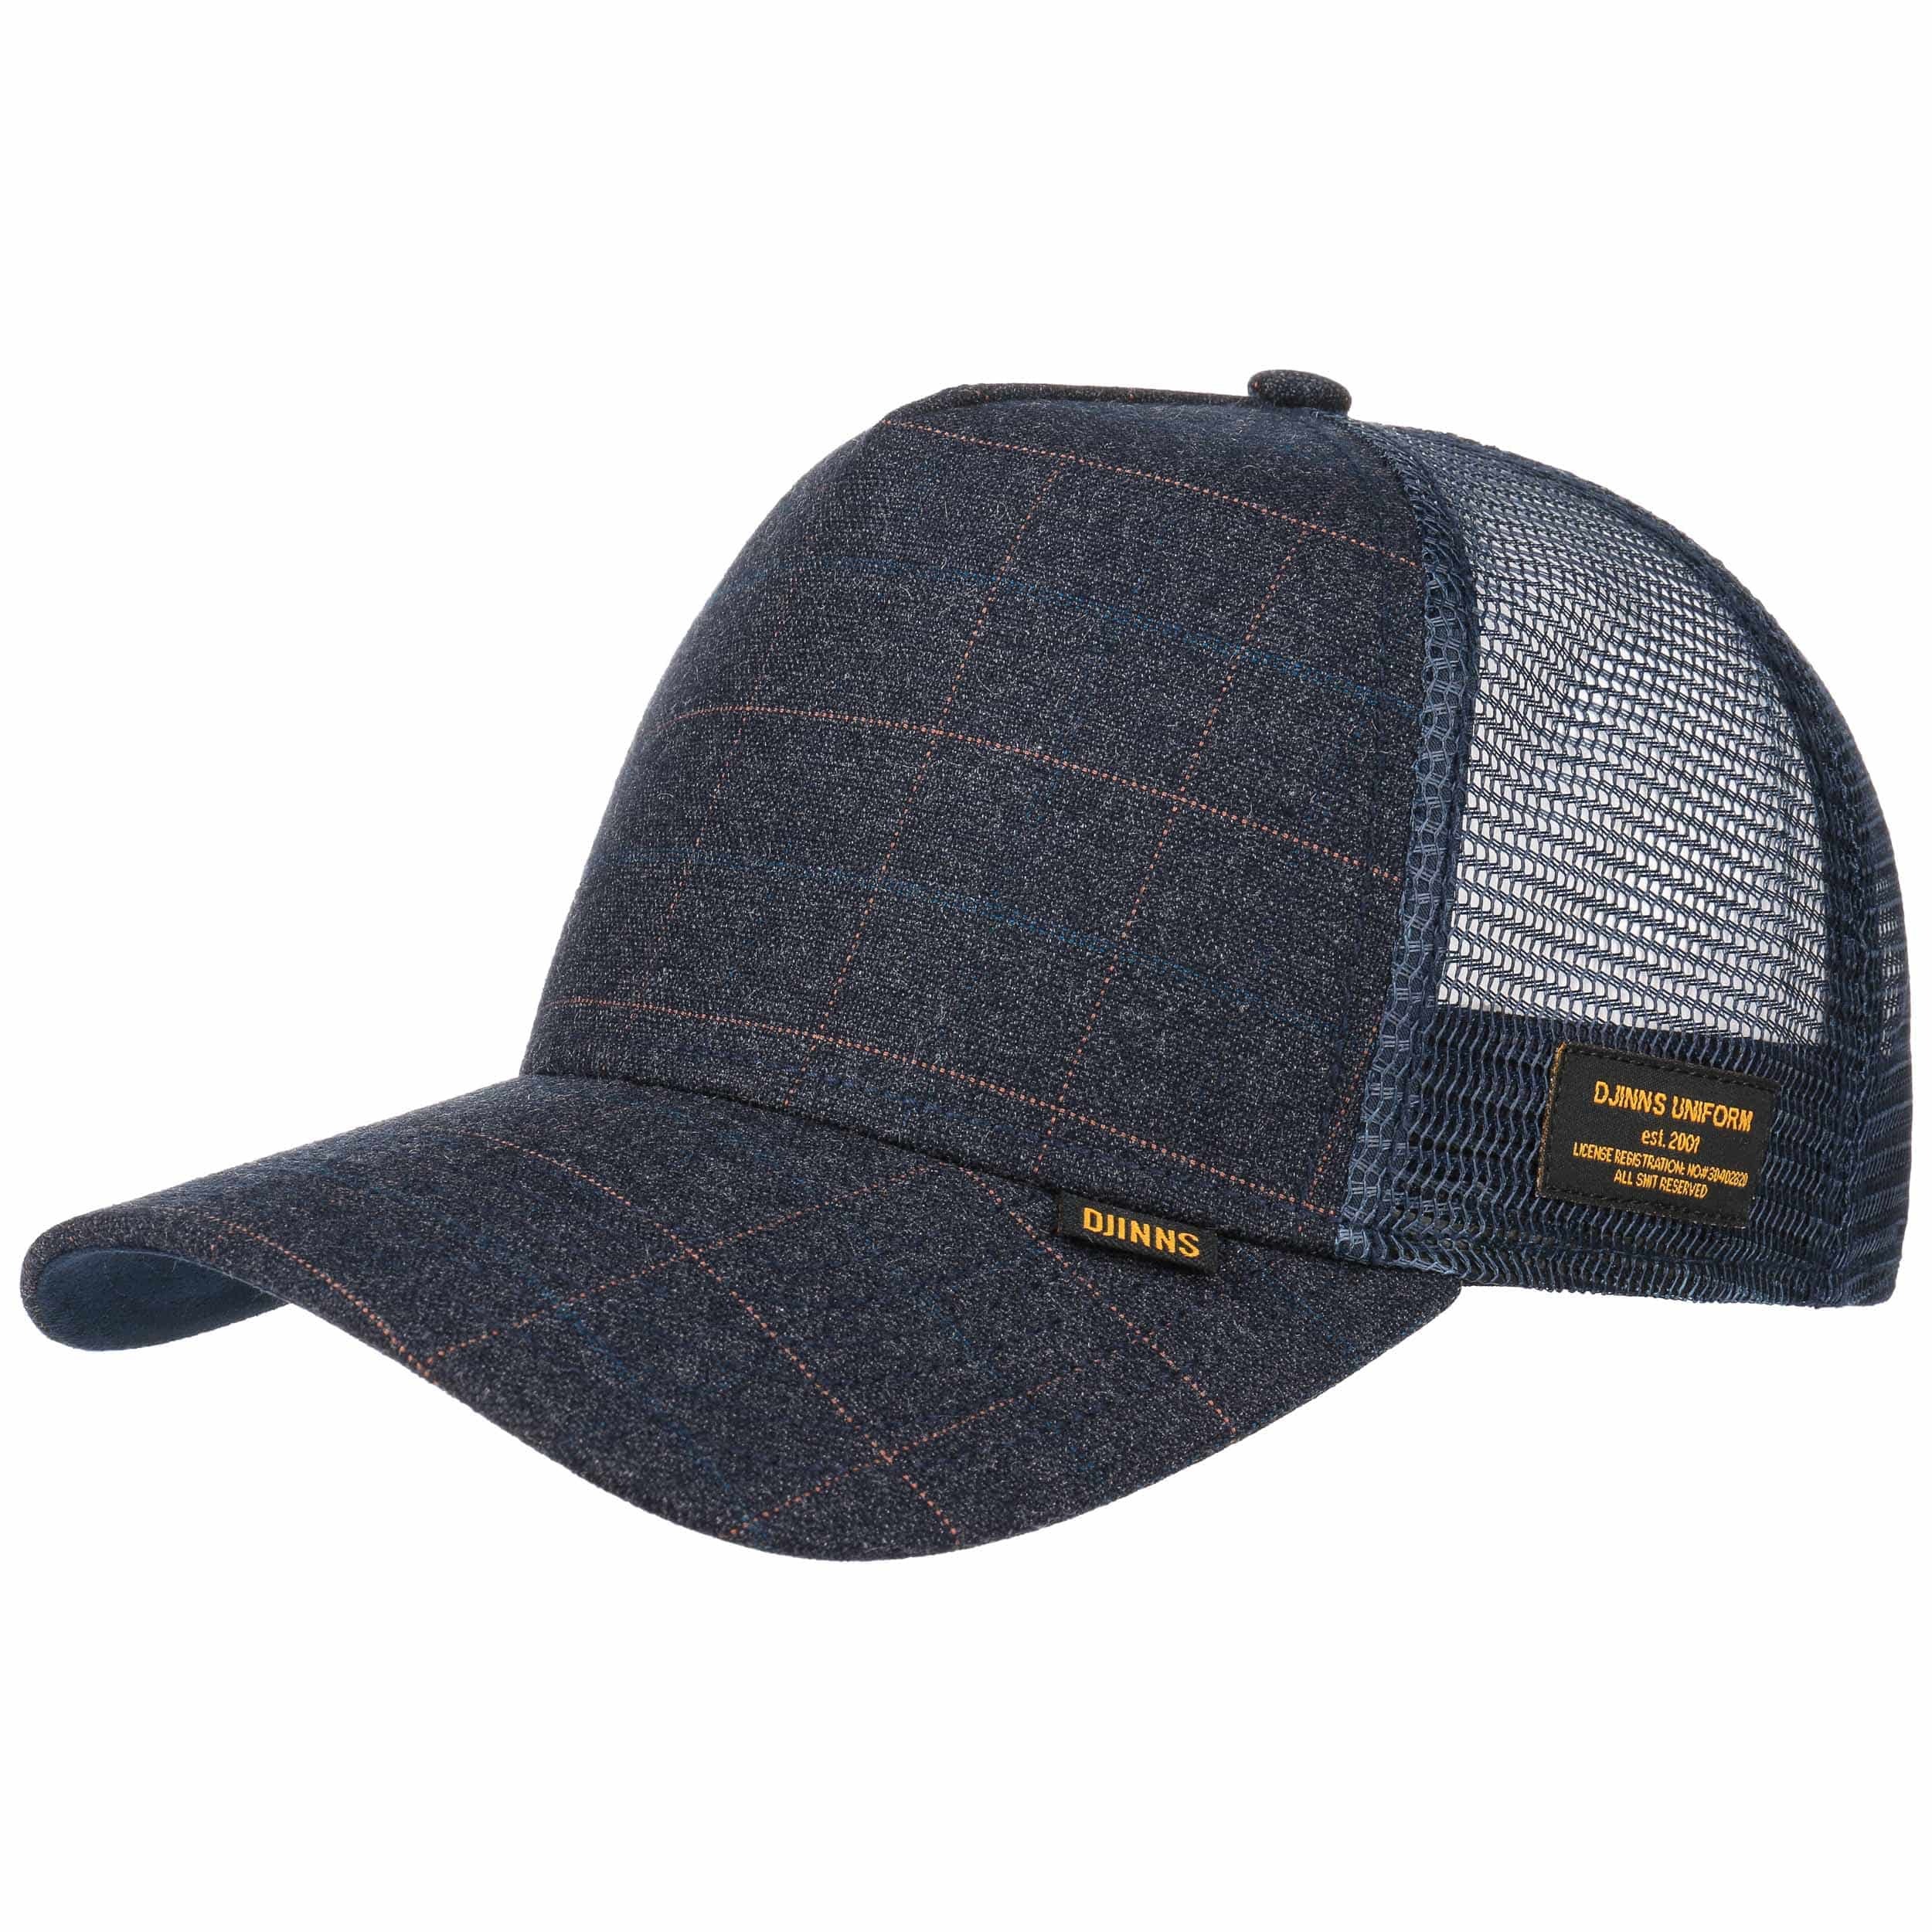 HFT Sherlock Mesh Cap by Djinns, EUR 21,99 --> Hats, caps & beanies ...